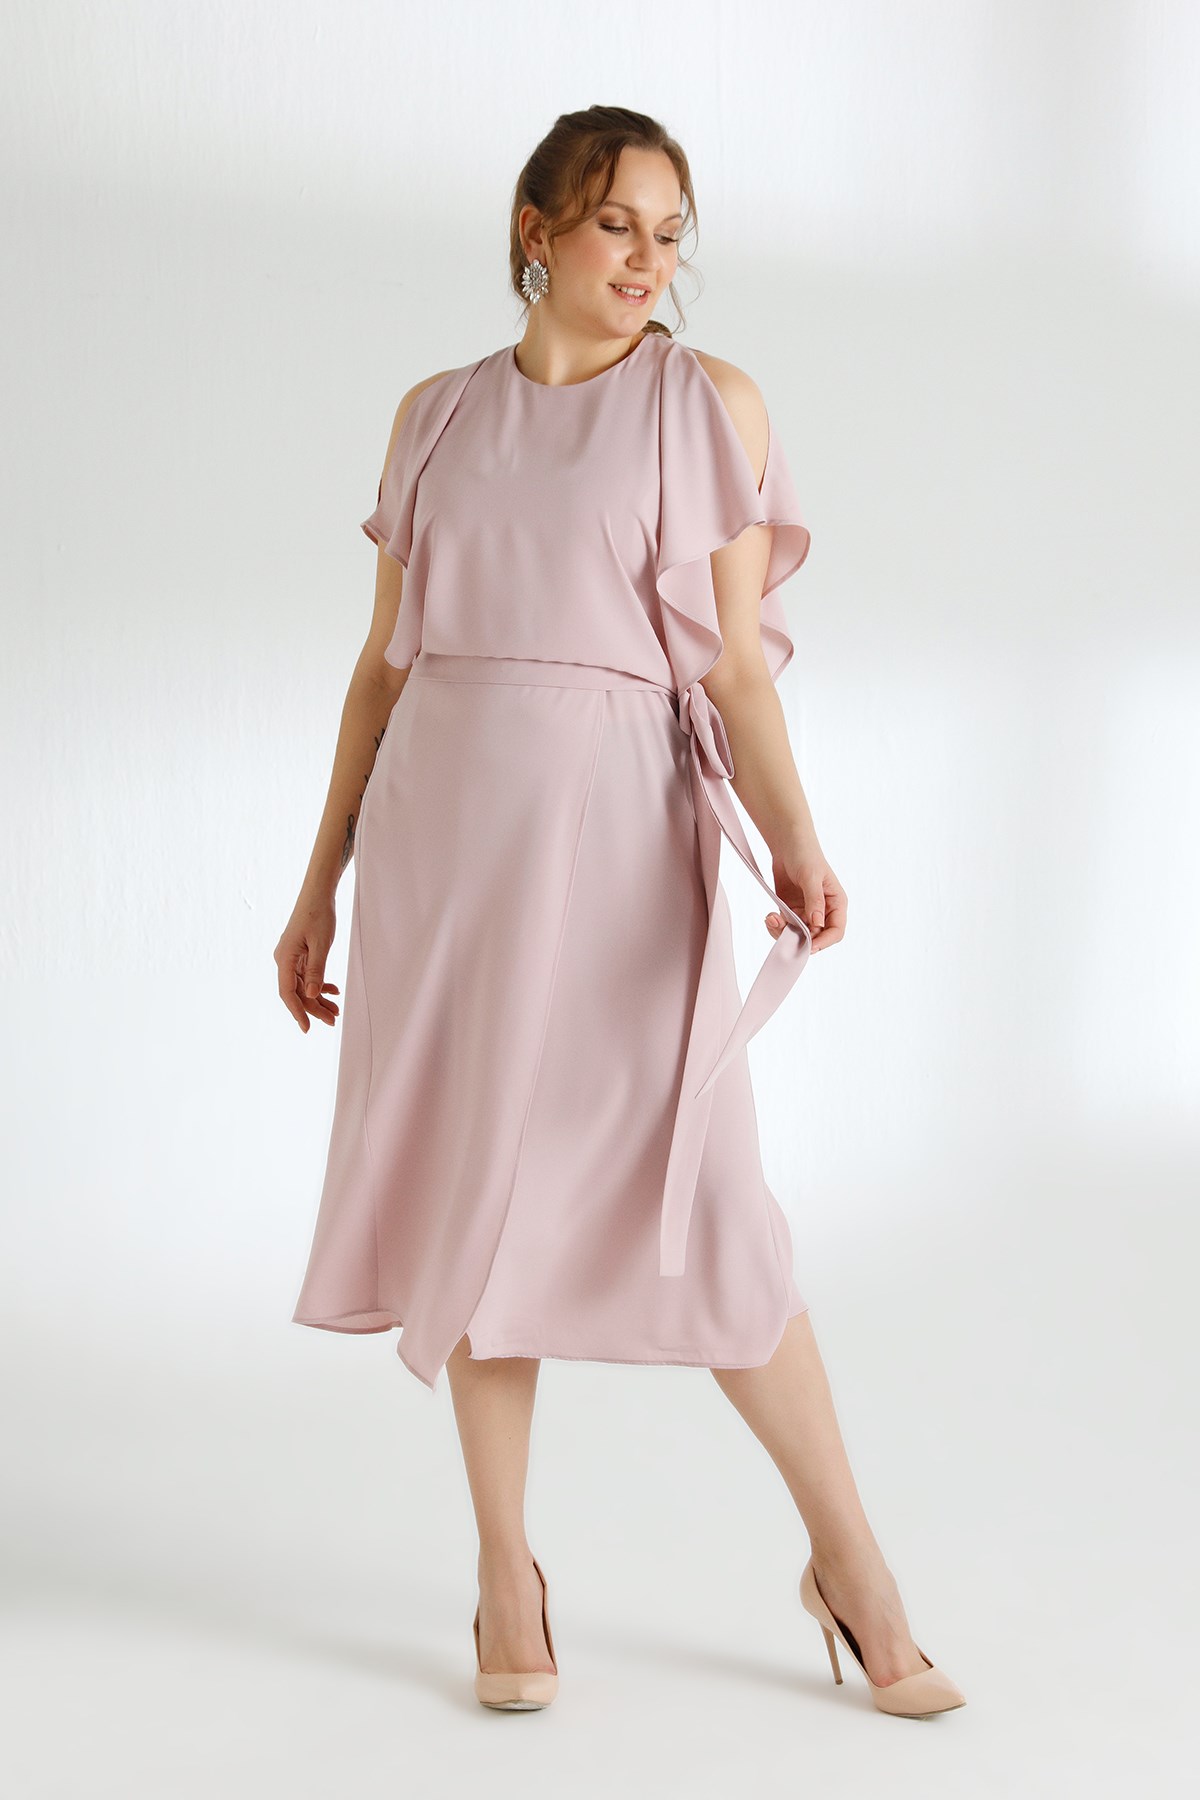 Nourai Dress Pink - low-cut pink dress I Dress I Modalogy